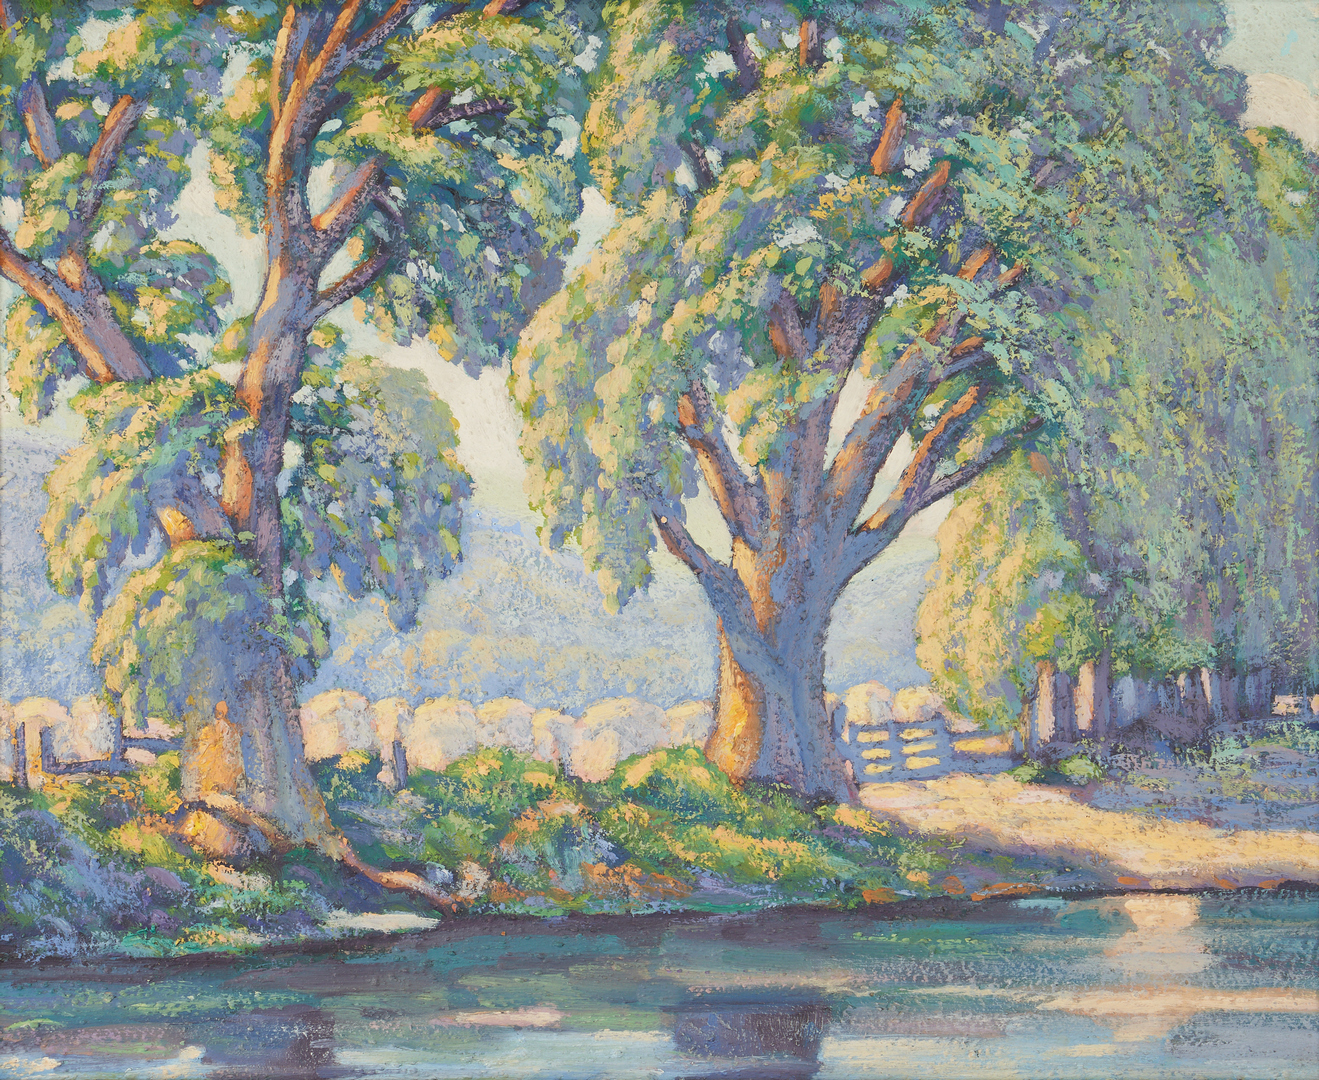 Lot 1000: Missouri School, 20th C. Impressionist Landscape